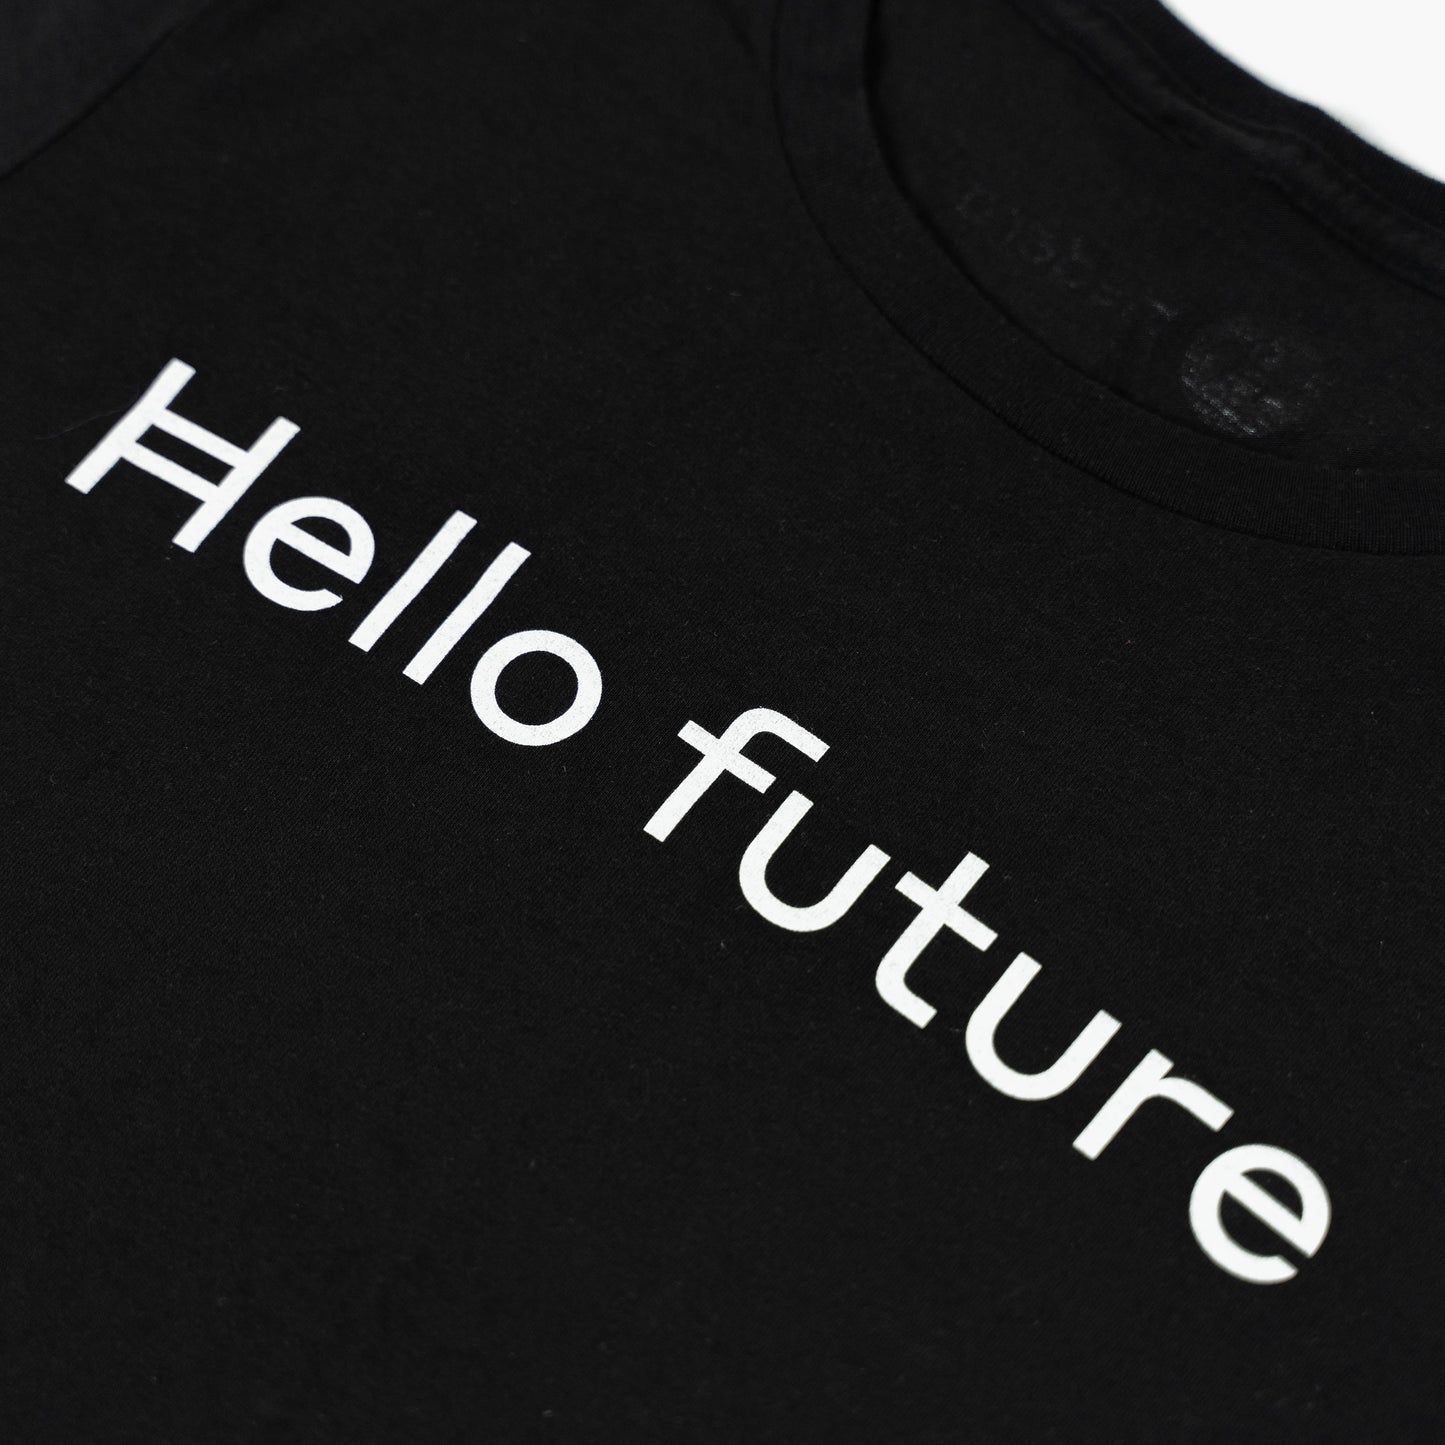 Ħello Future Women's T-shirt (Black)